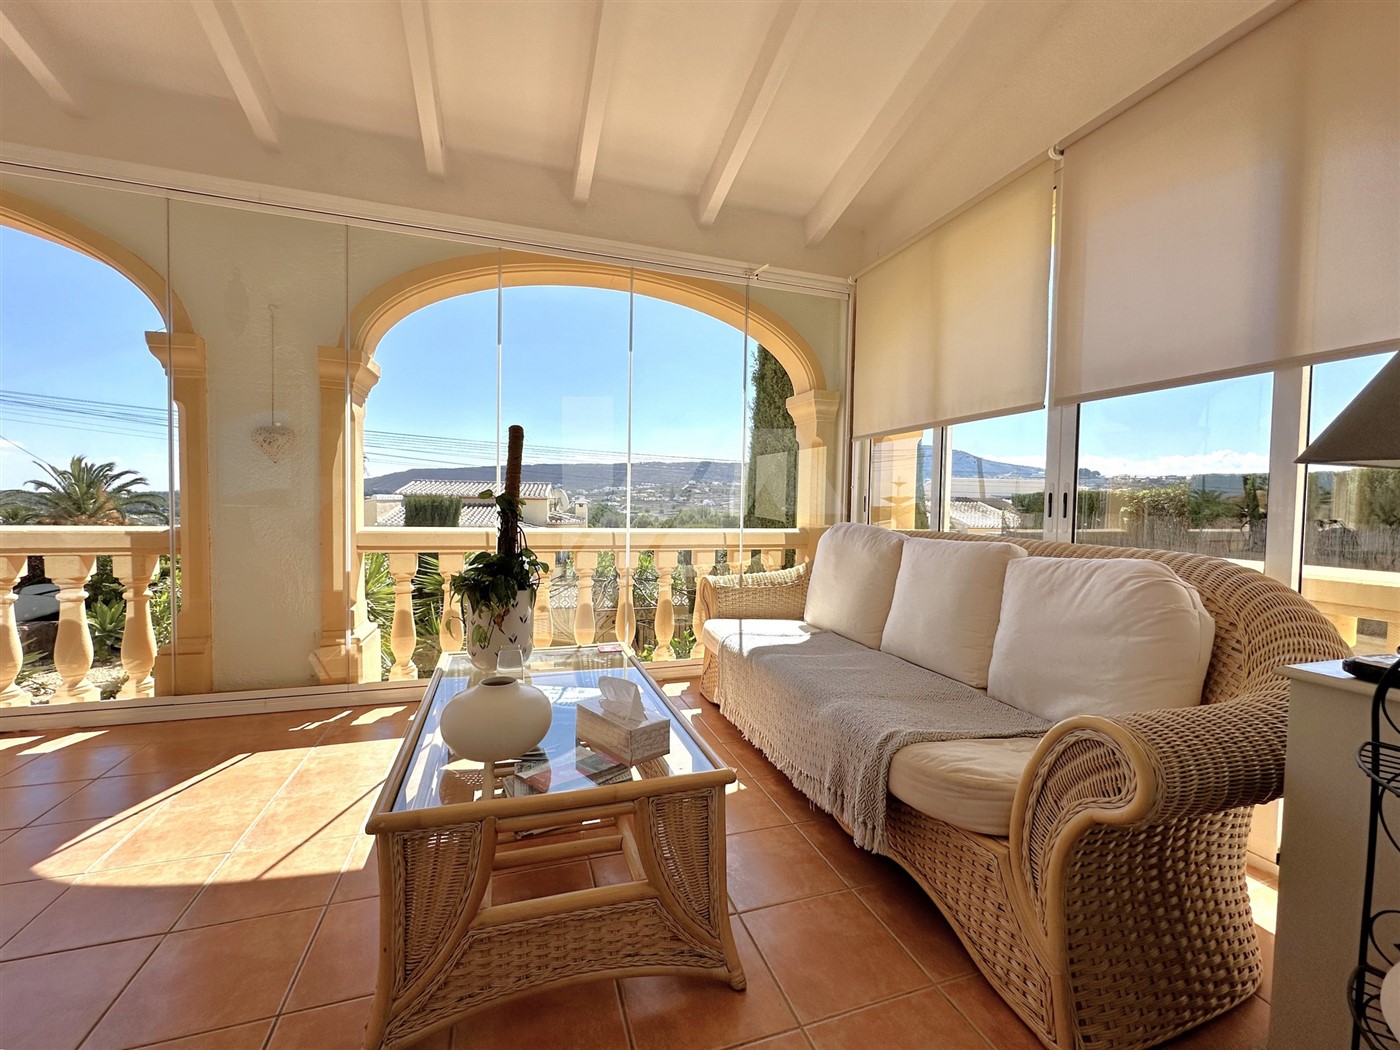 Charming Mediterranean villa for sale in Benitachell, with open mountain views.